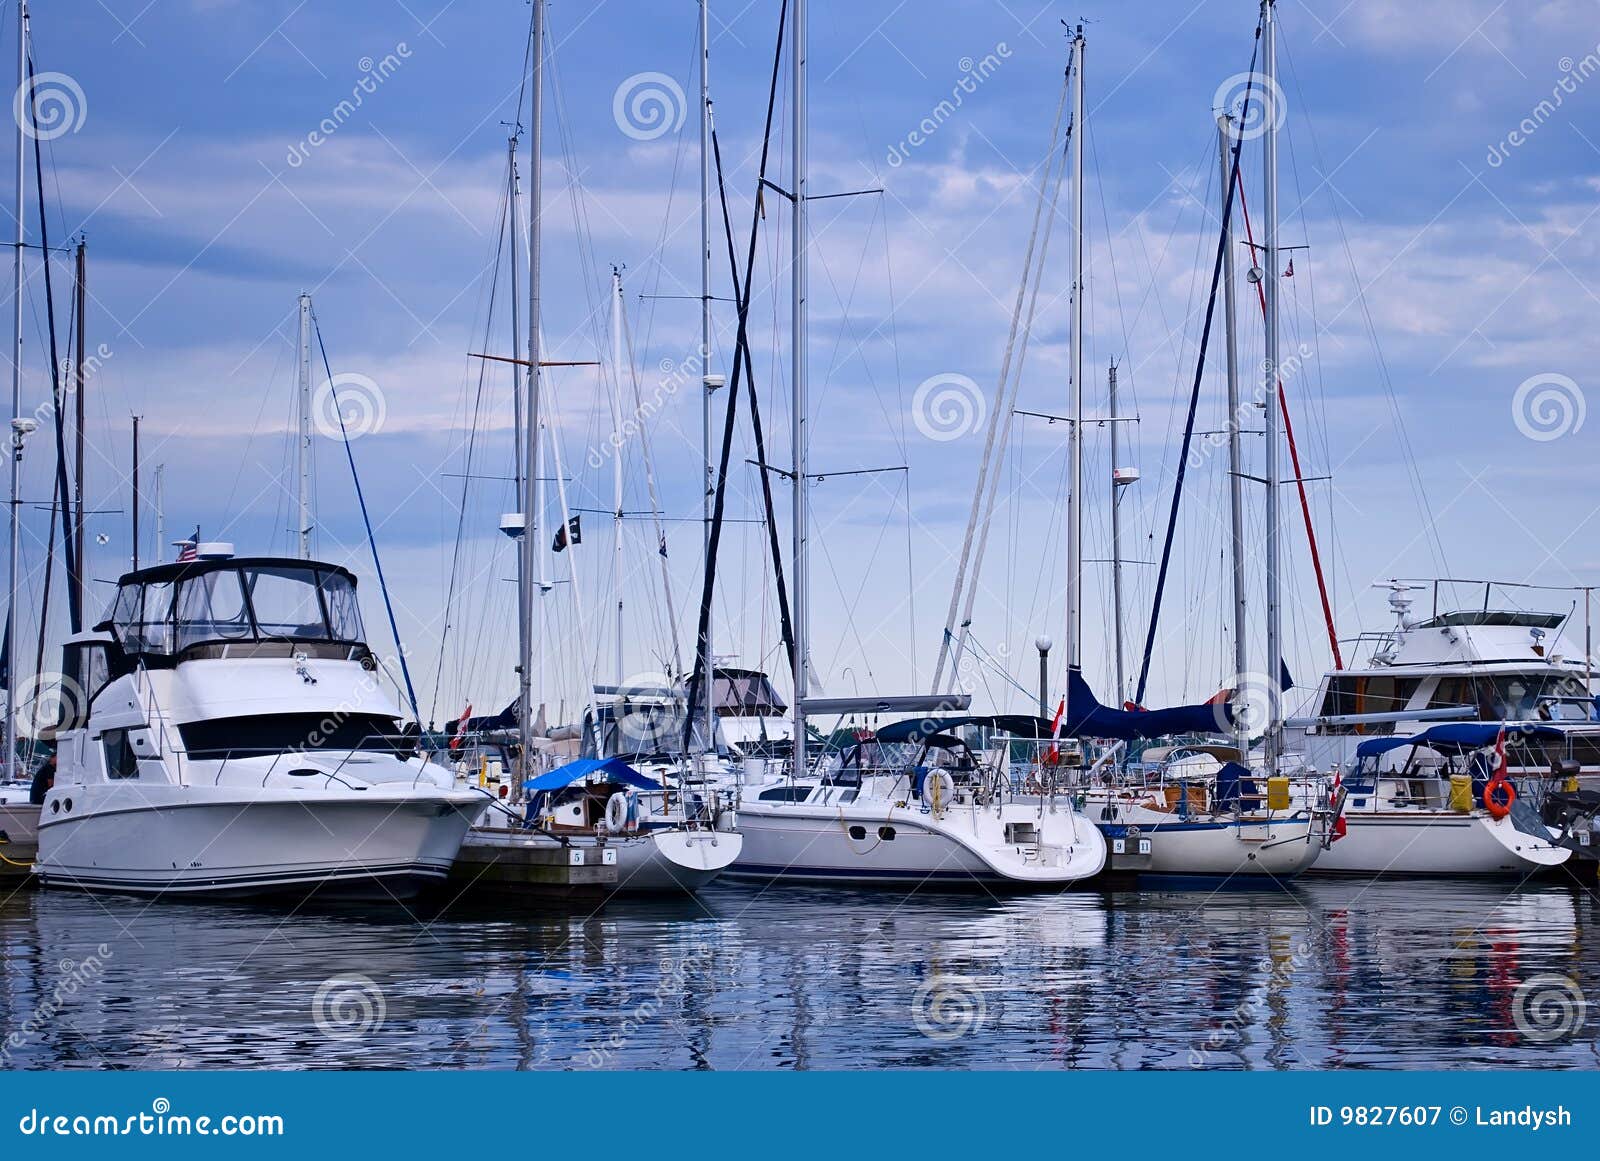 Luxury Yachts Moored in Harbor Stock Image - Image of sail, marina: 9827607